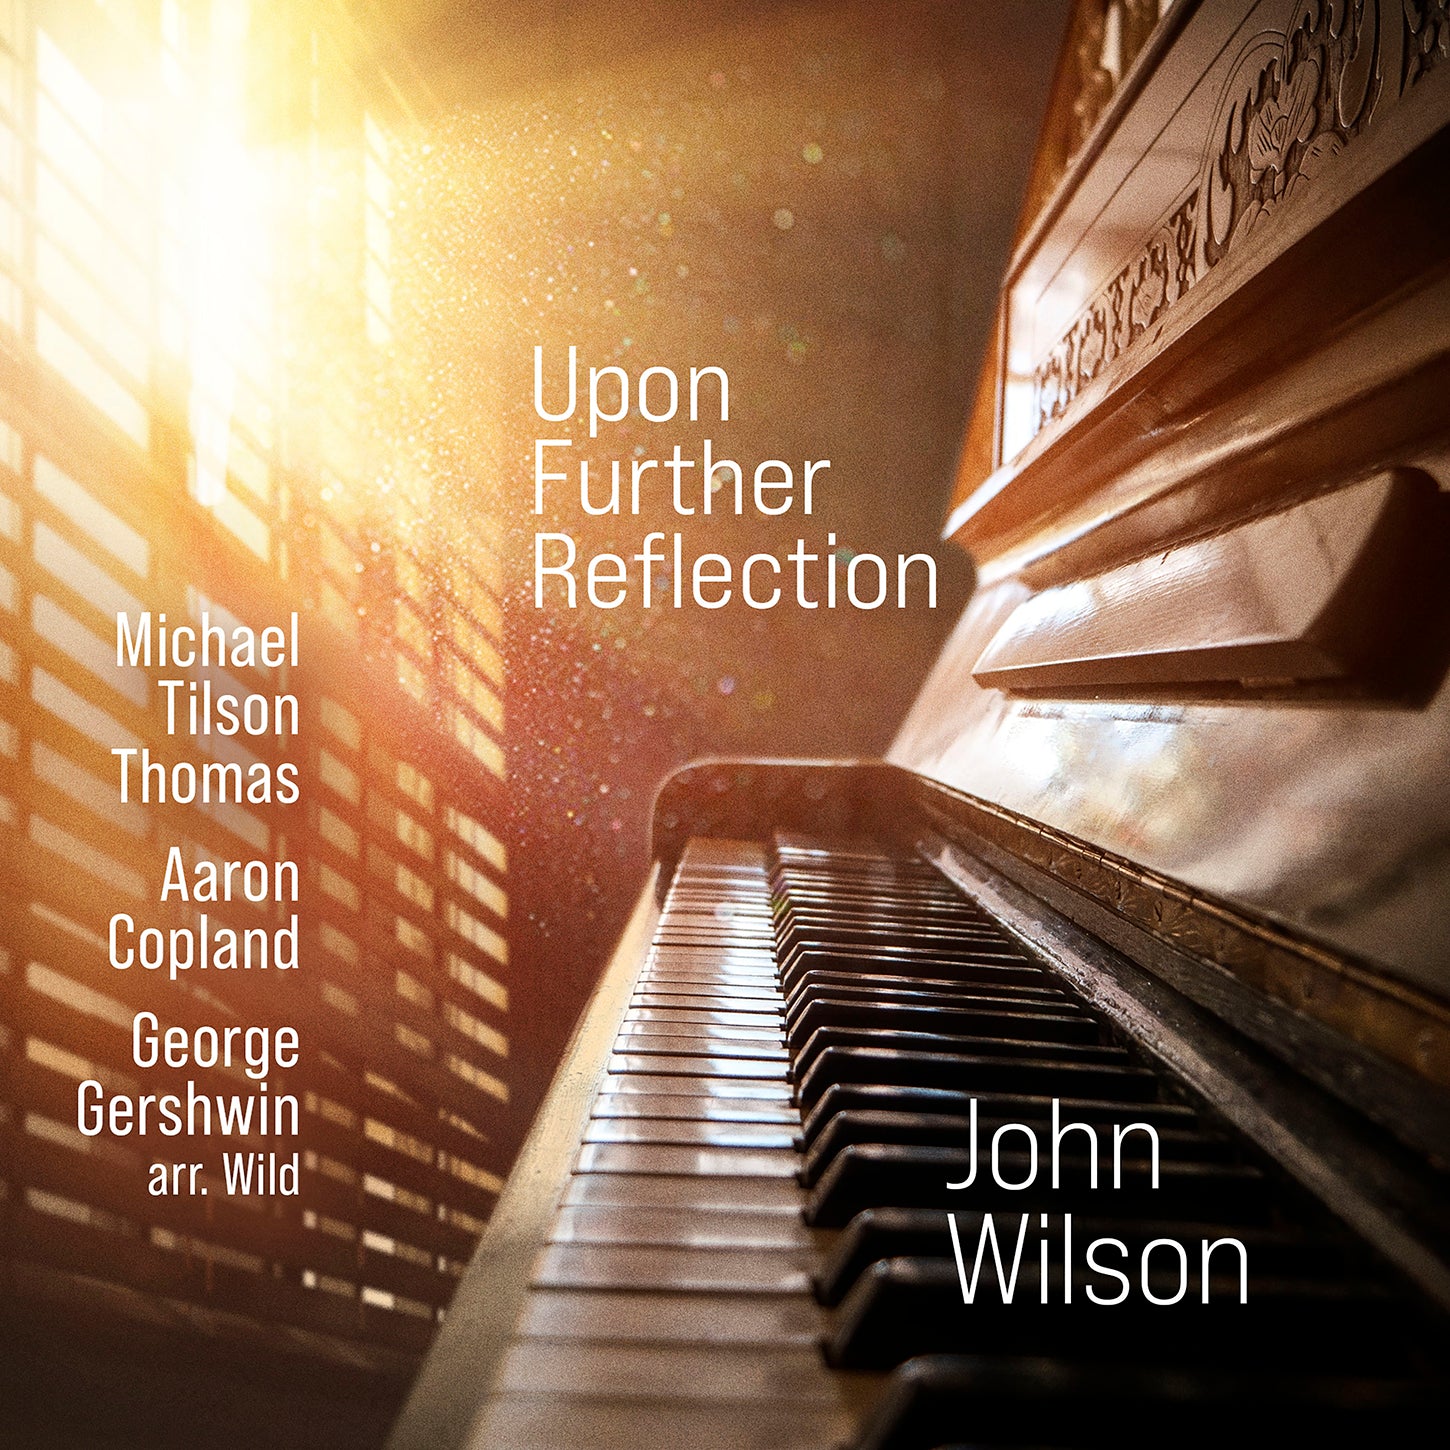 Upon Further Reflection - Copland, Tilson Thomas & Wild / Wilson